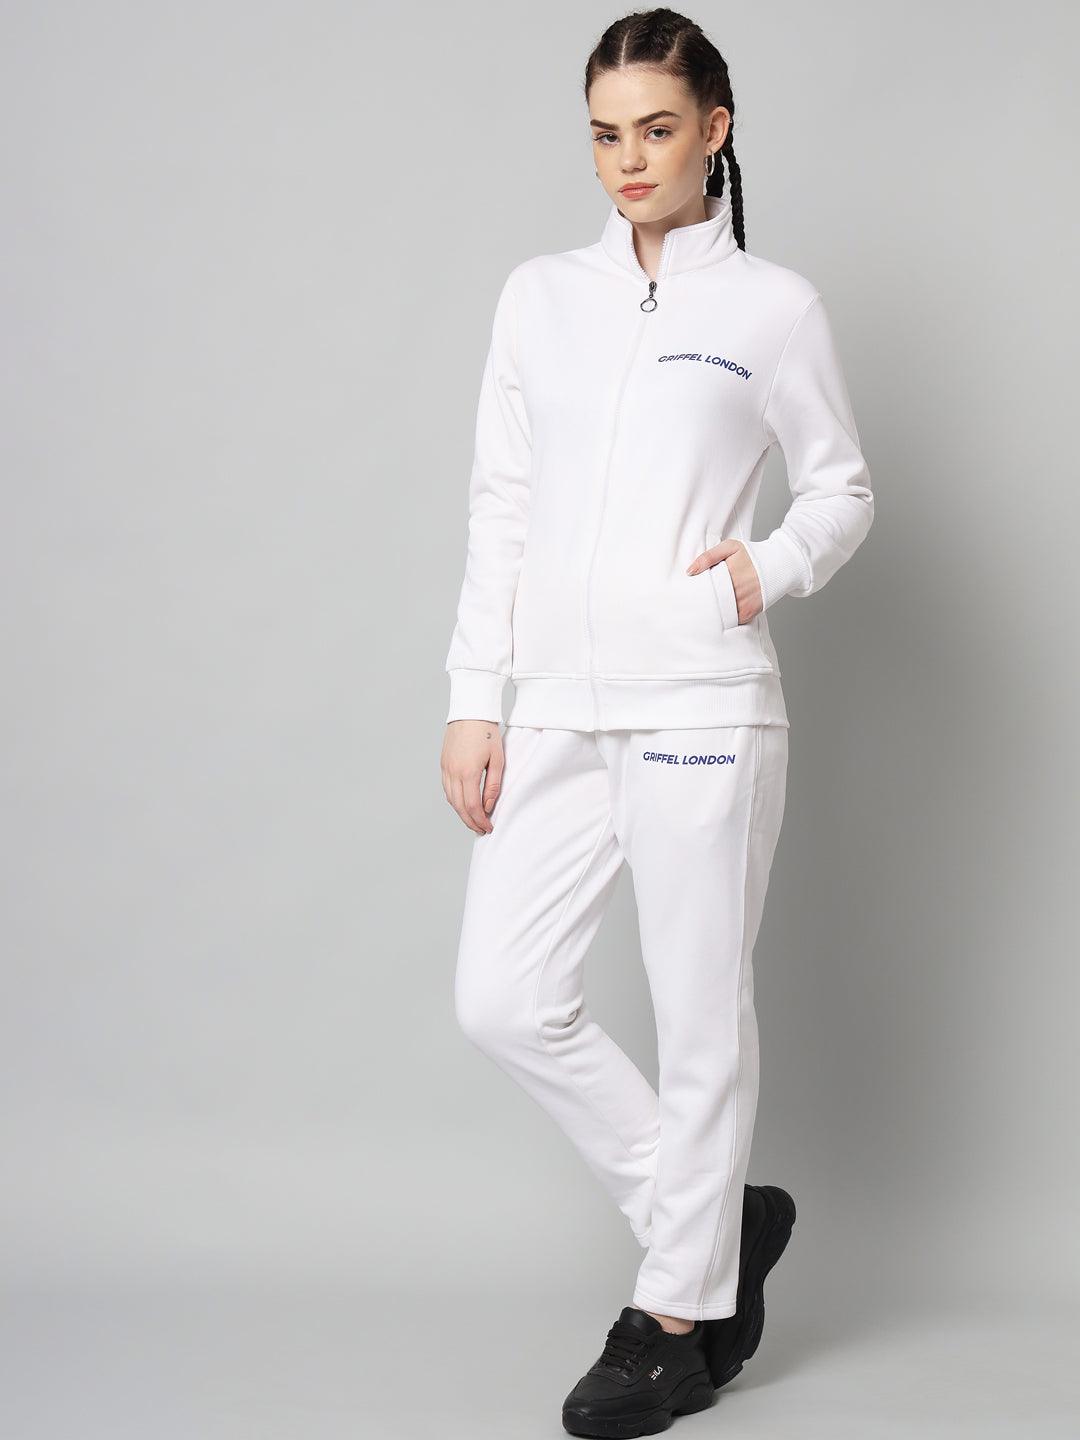 Griffel Women Solid Fleece Zipper Neck Sweatshirt and Joggers Full set White Tracksuit - griffel